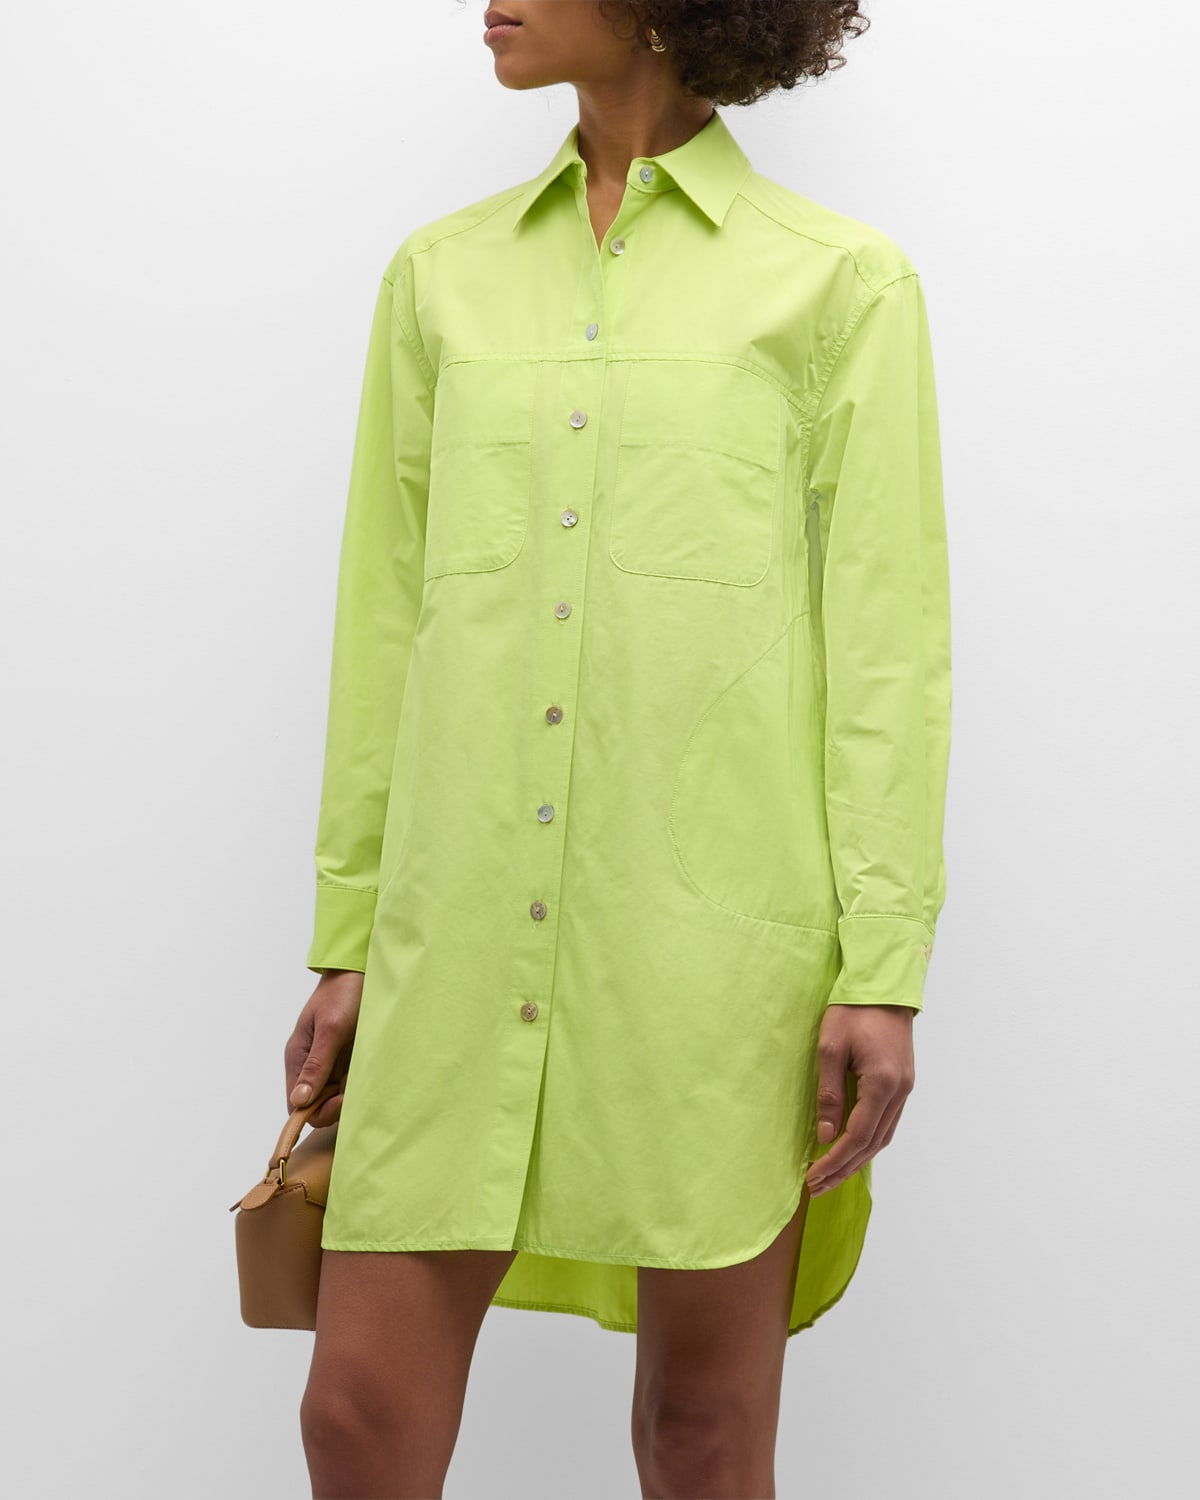 Finley Nash Taffeta Mini Shift Shirtdress In Neon Lime